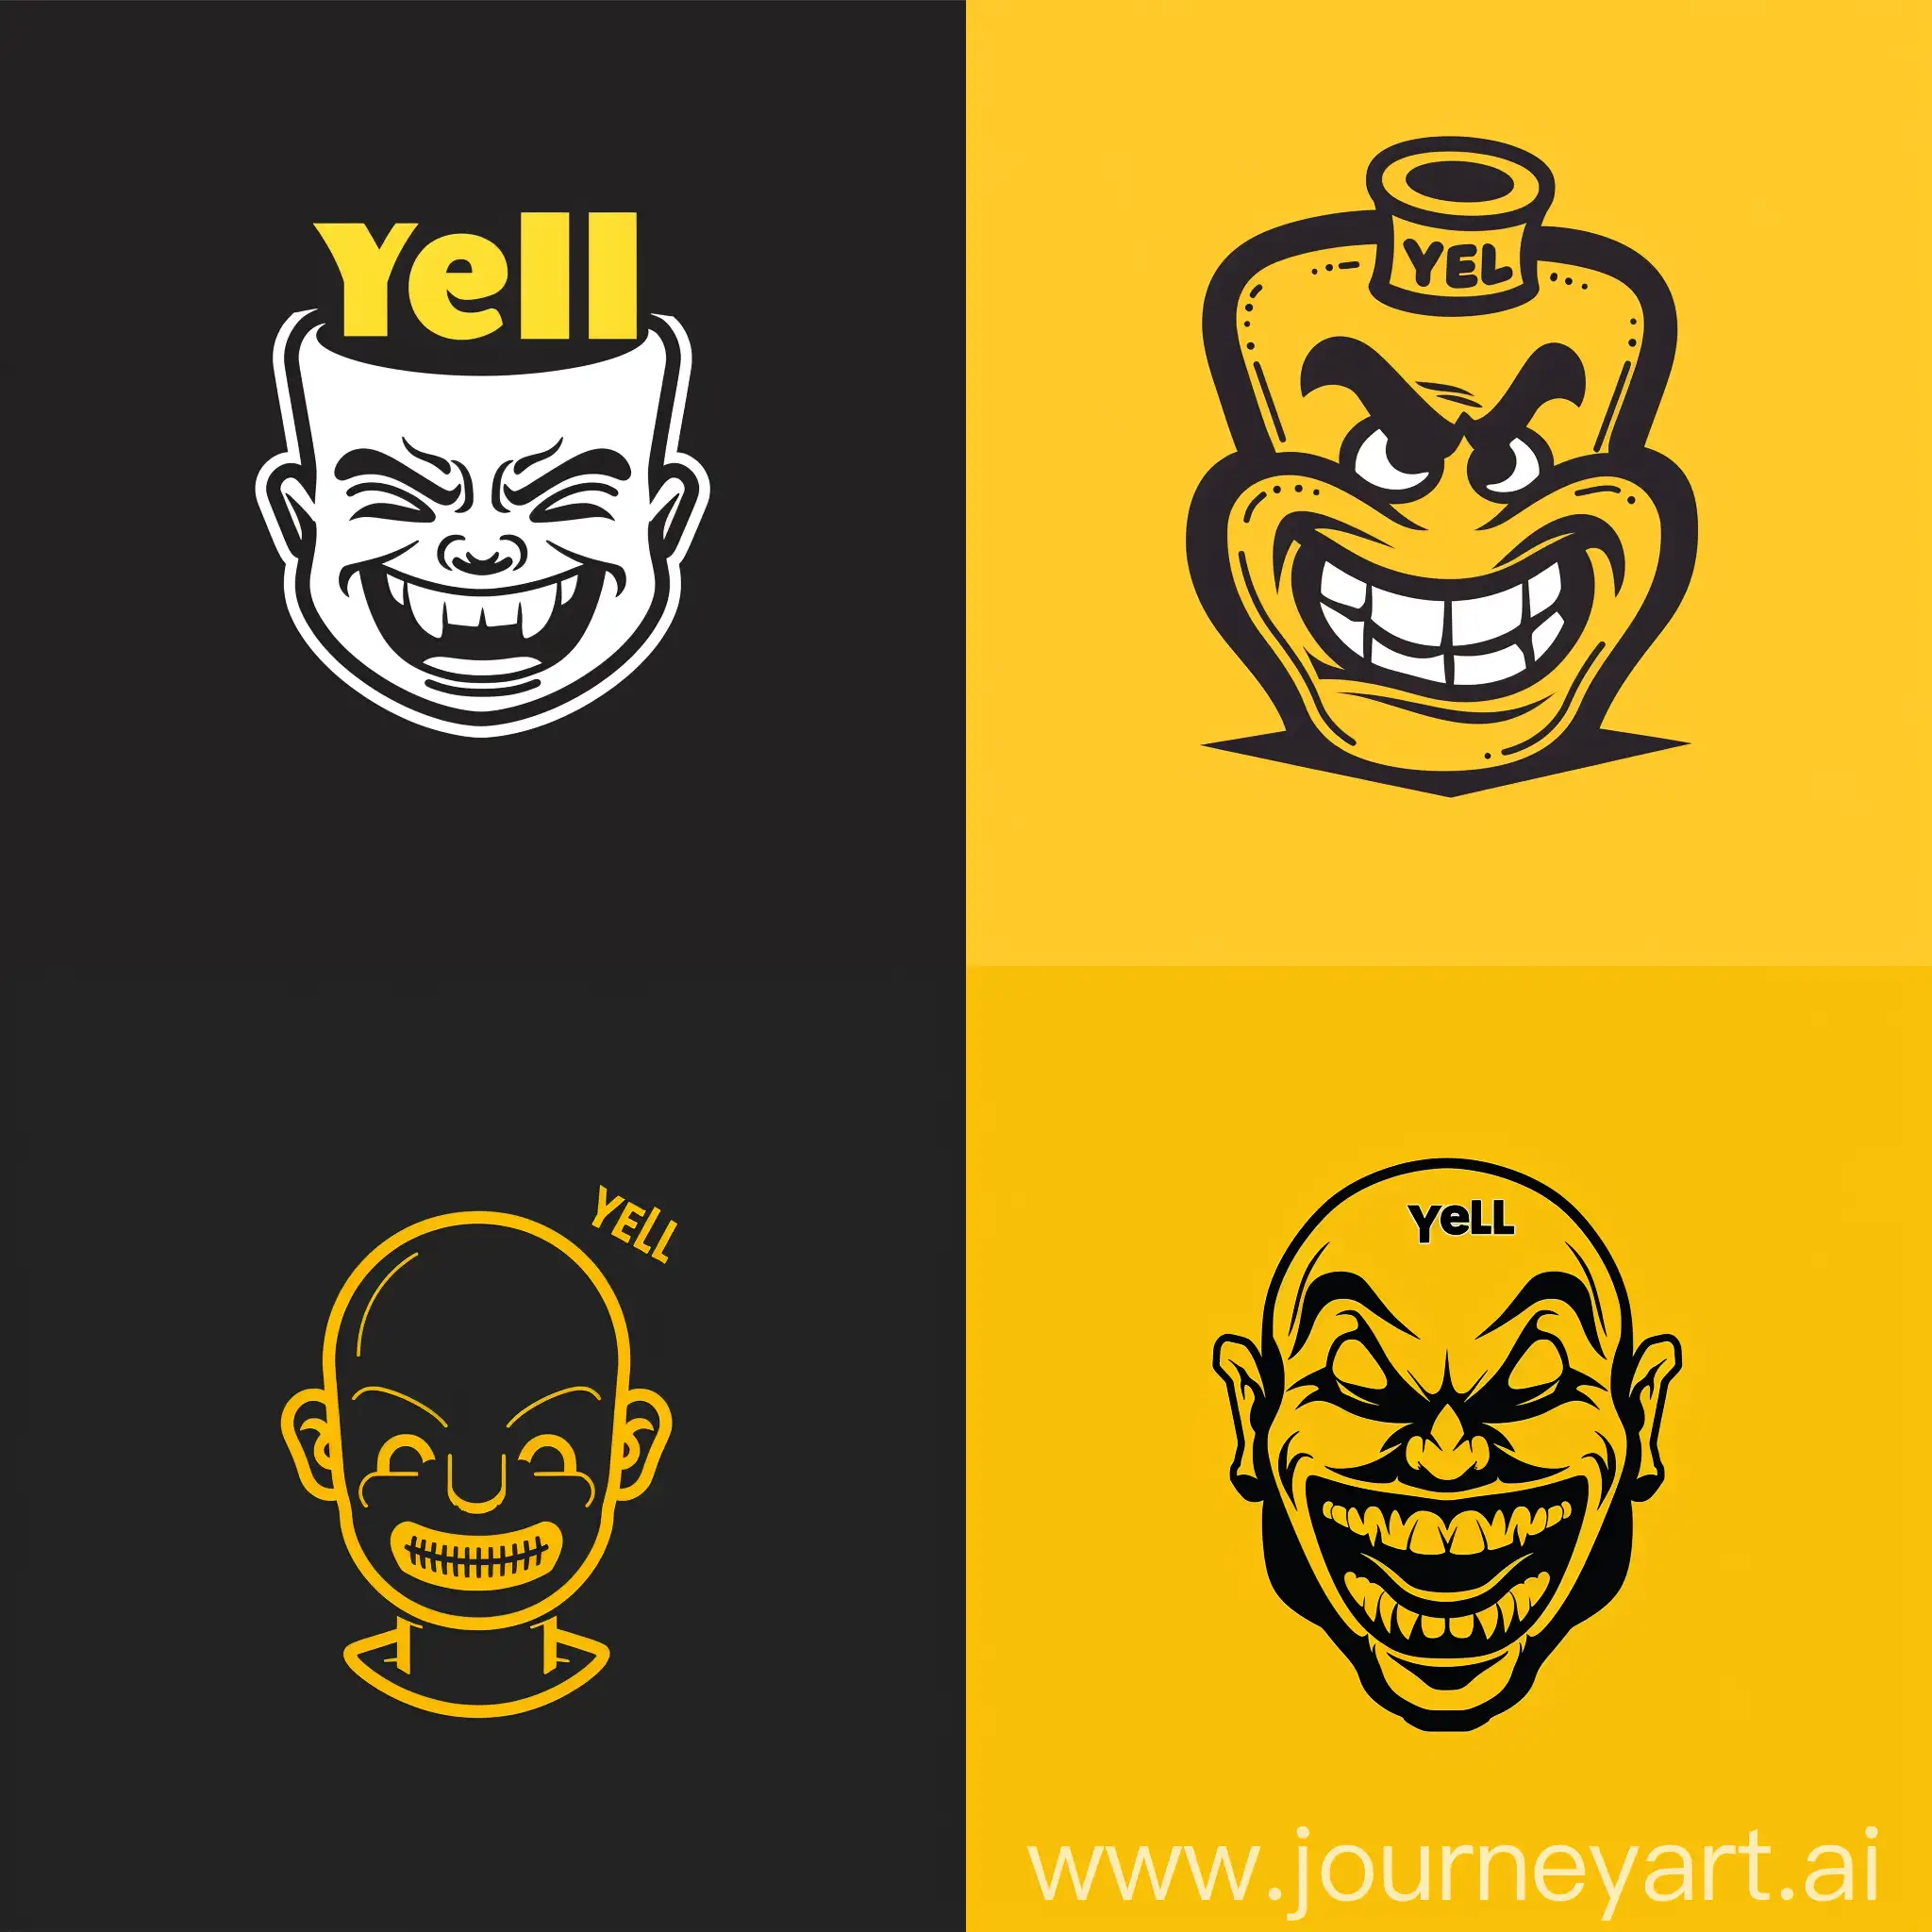 Minimalist-Line-Art-Logo-Yellow-Head-with-Machiavellian-Smile